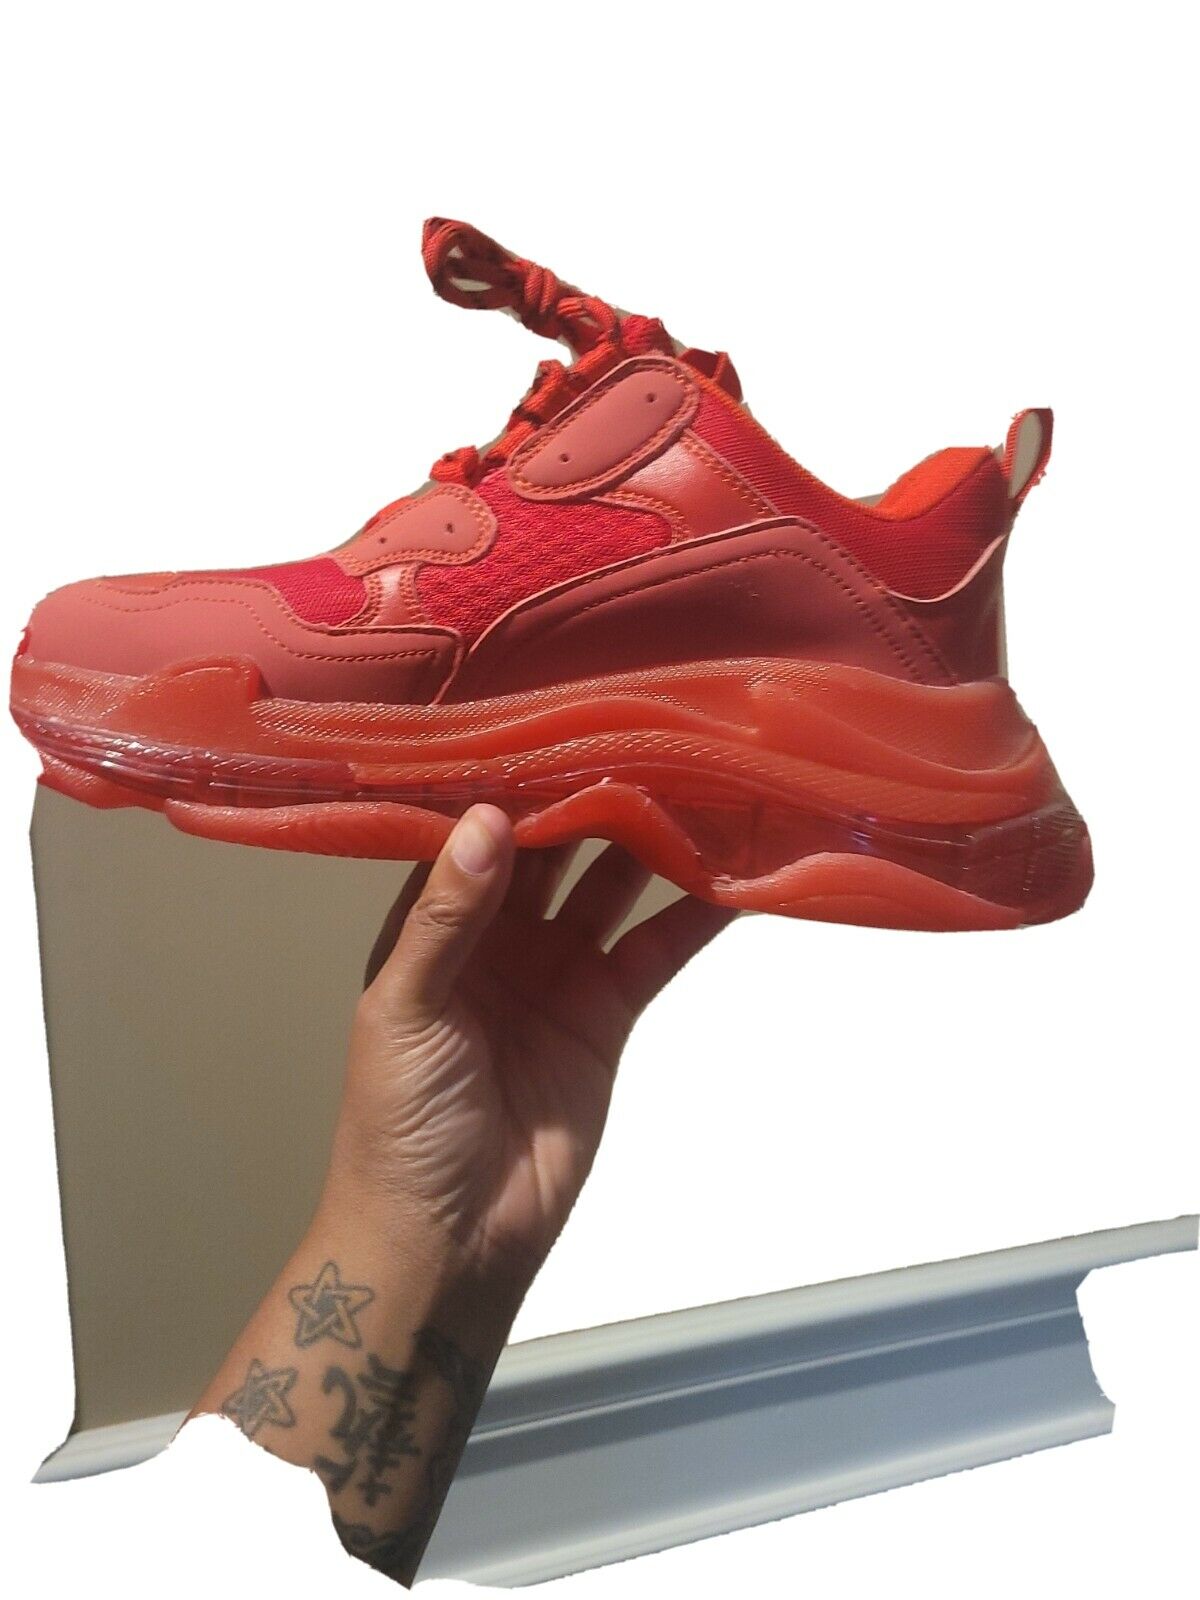 Red Designer Shoes size 8